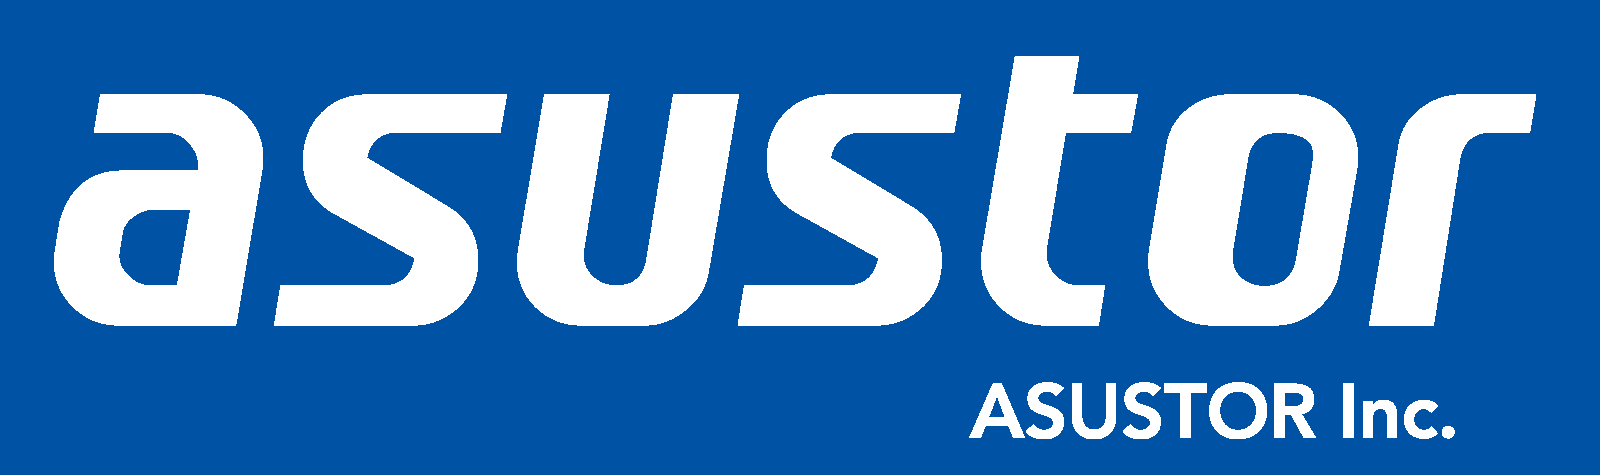 Asustor_logo